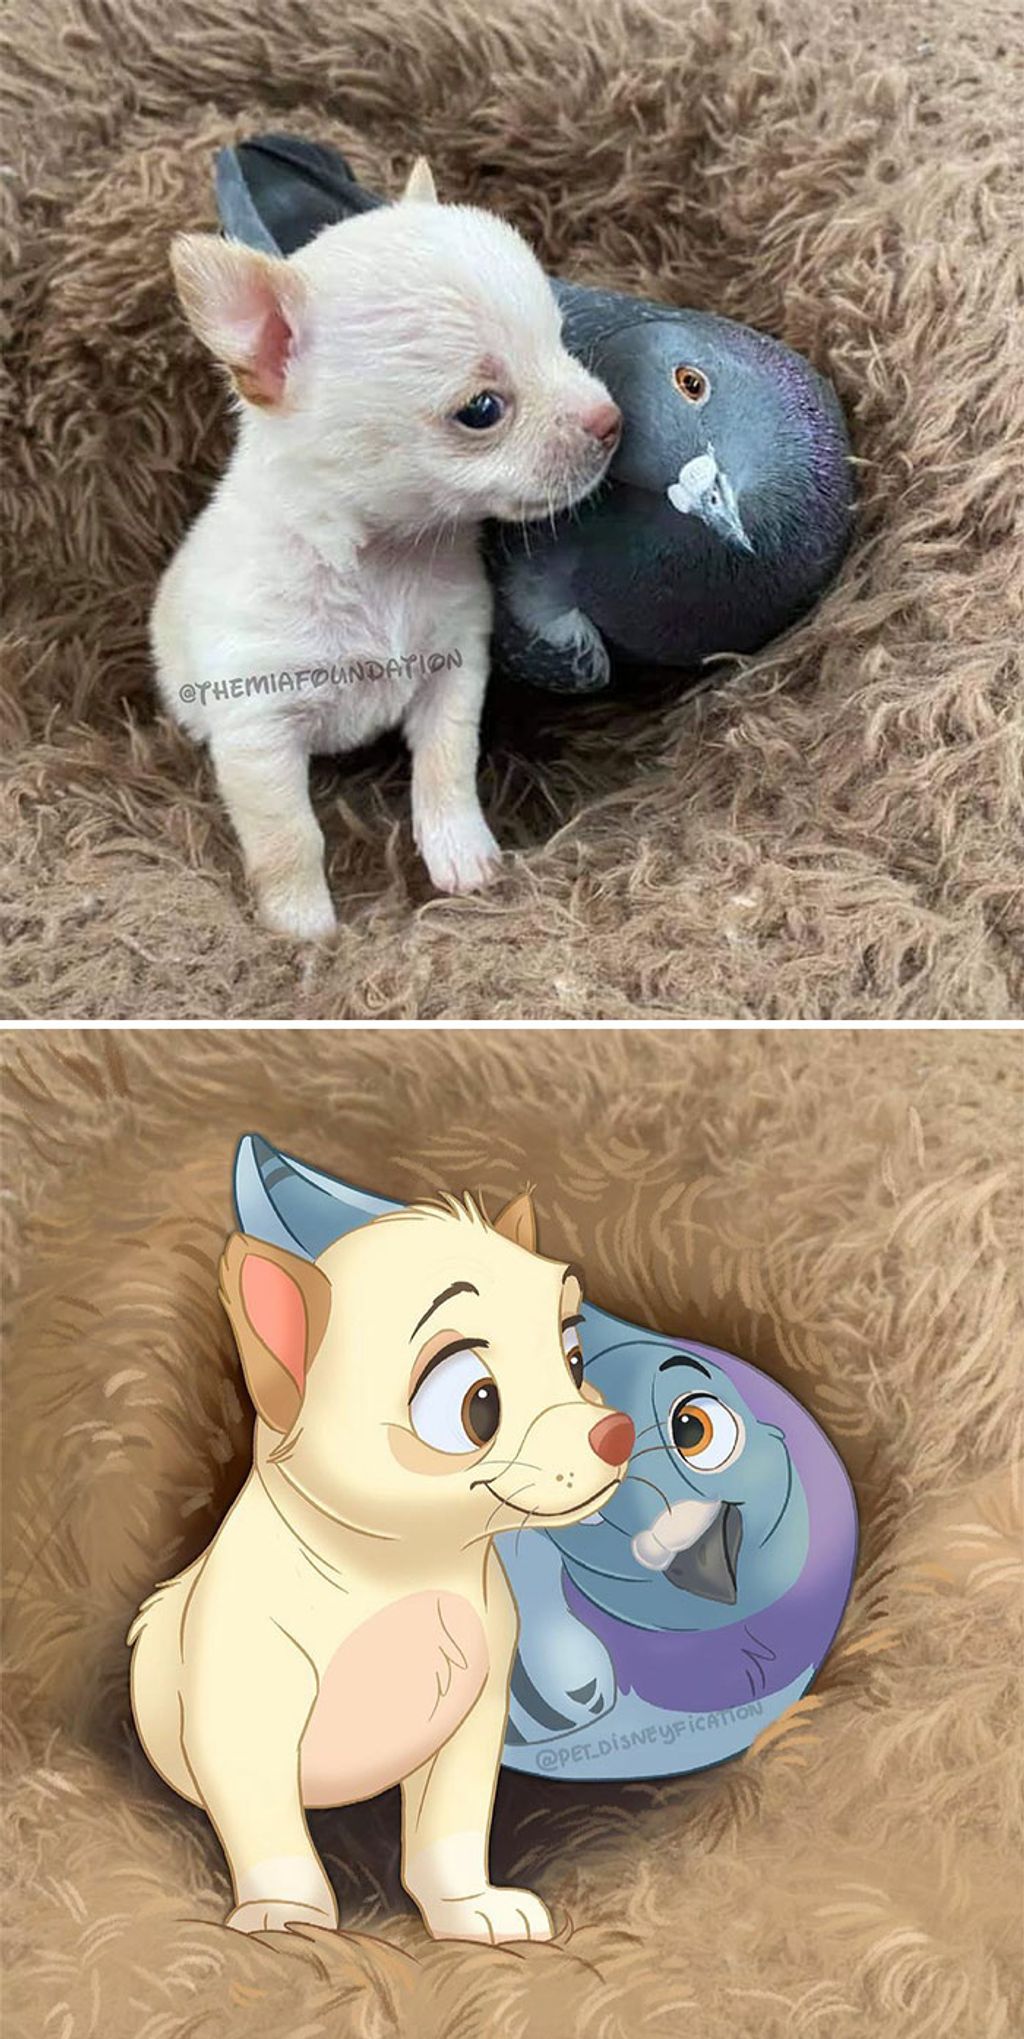 Forrás: Instagram/Pet Disneyfication, Boredpanda